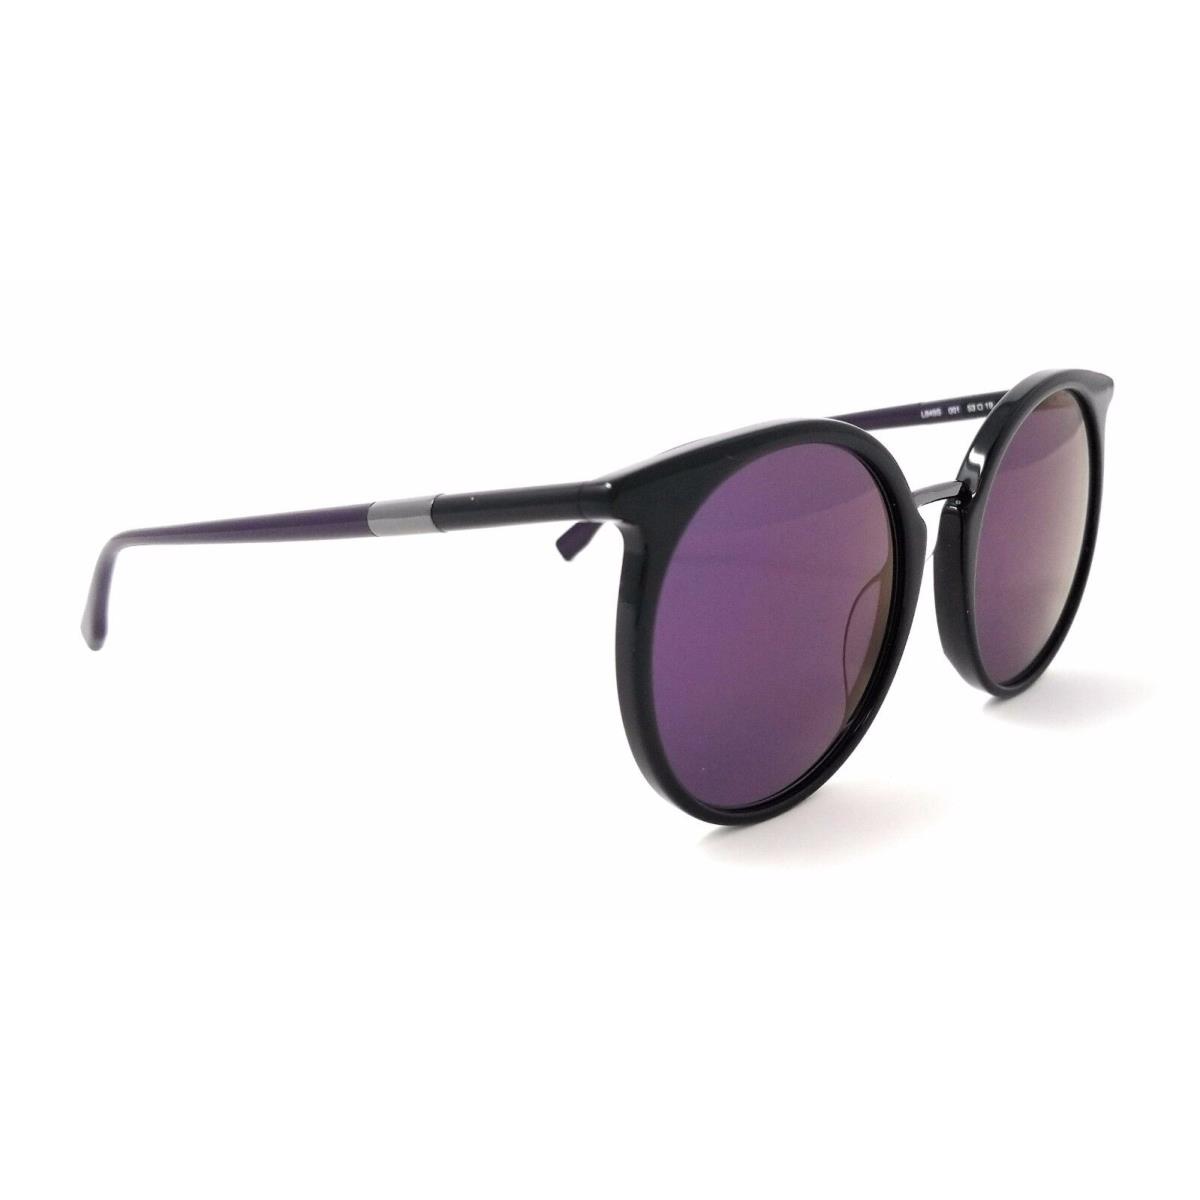 Lacoste sunglasses  - Black Frame, GREY Lens